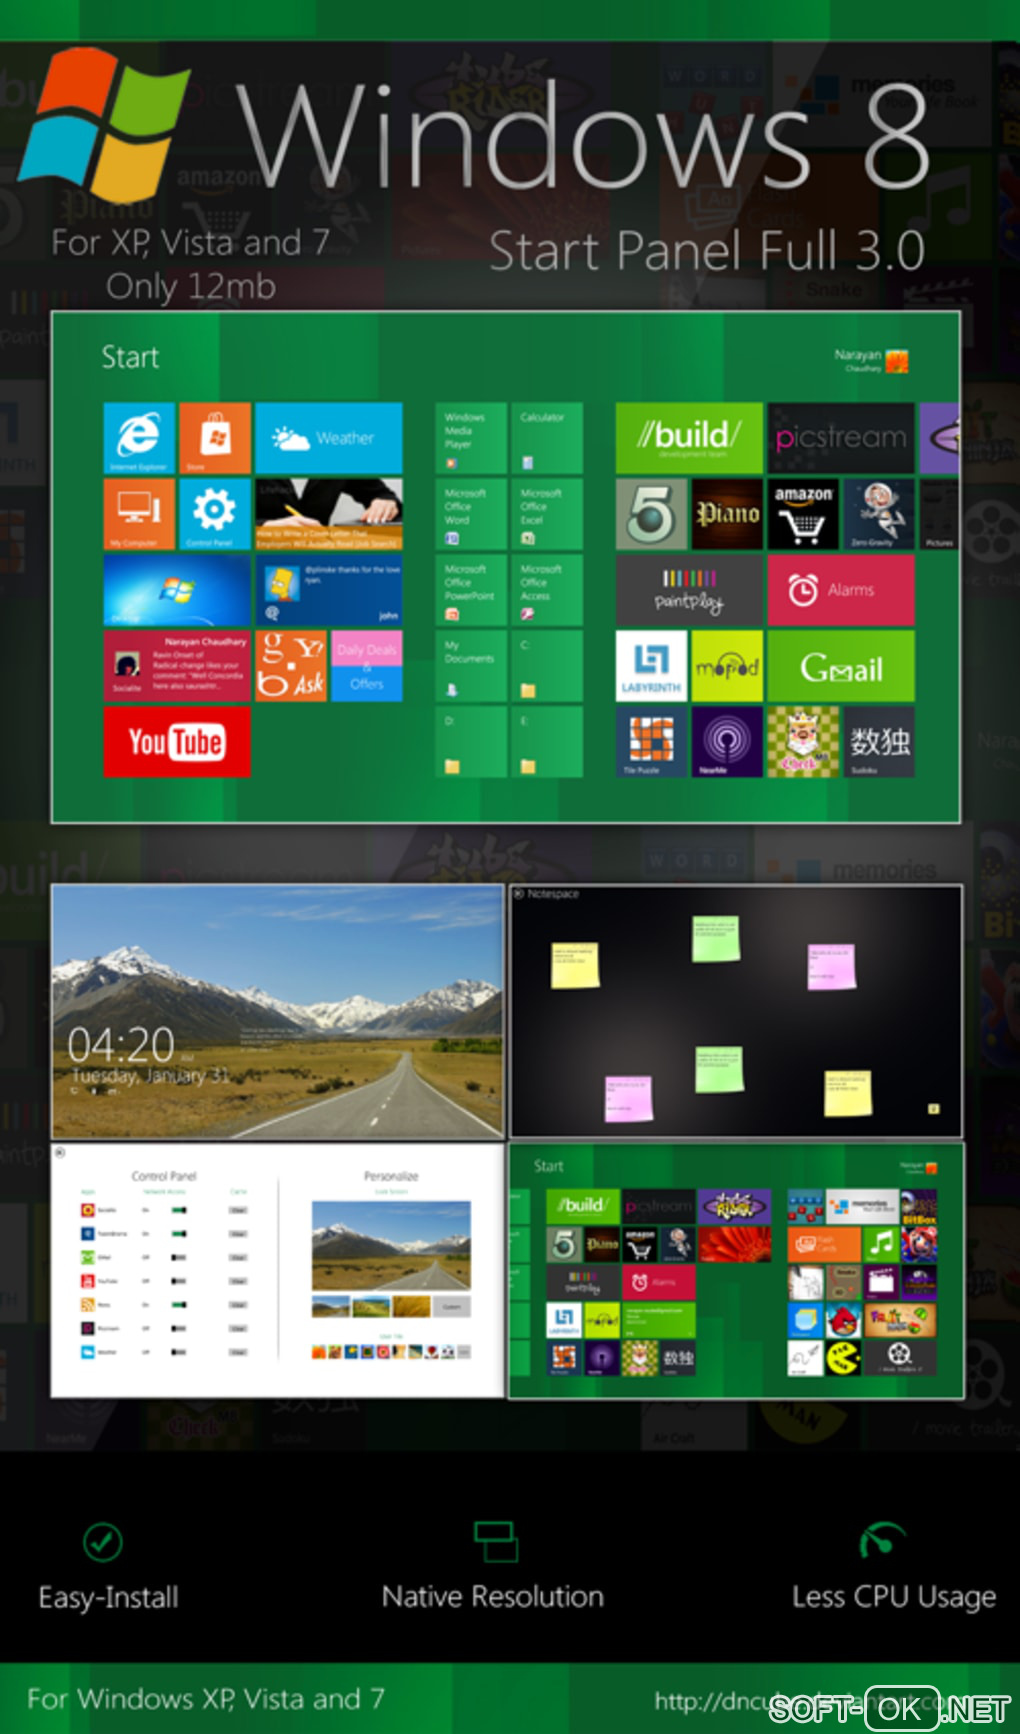 The appearance "Windows 8 Start Screen Full"